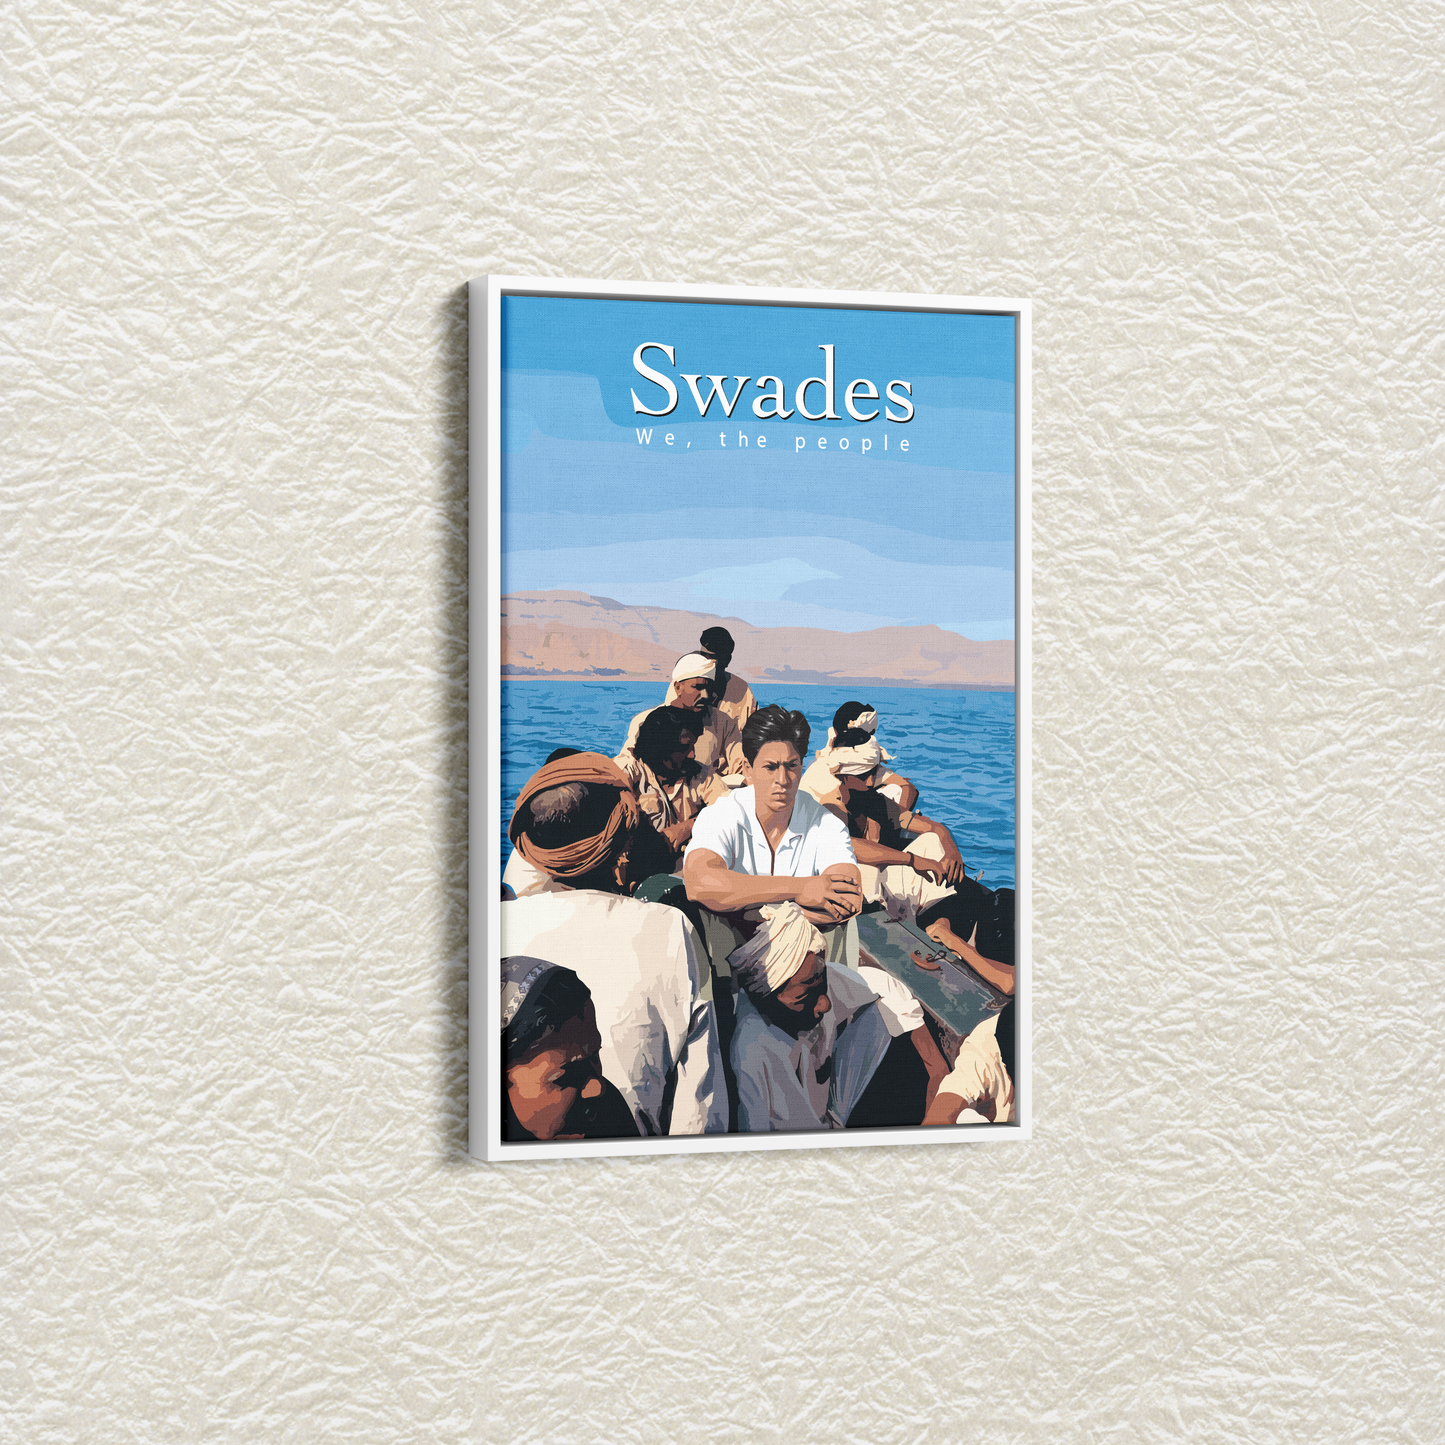 Swades- We, the people [Digital Illustration]